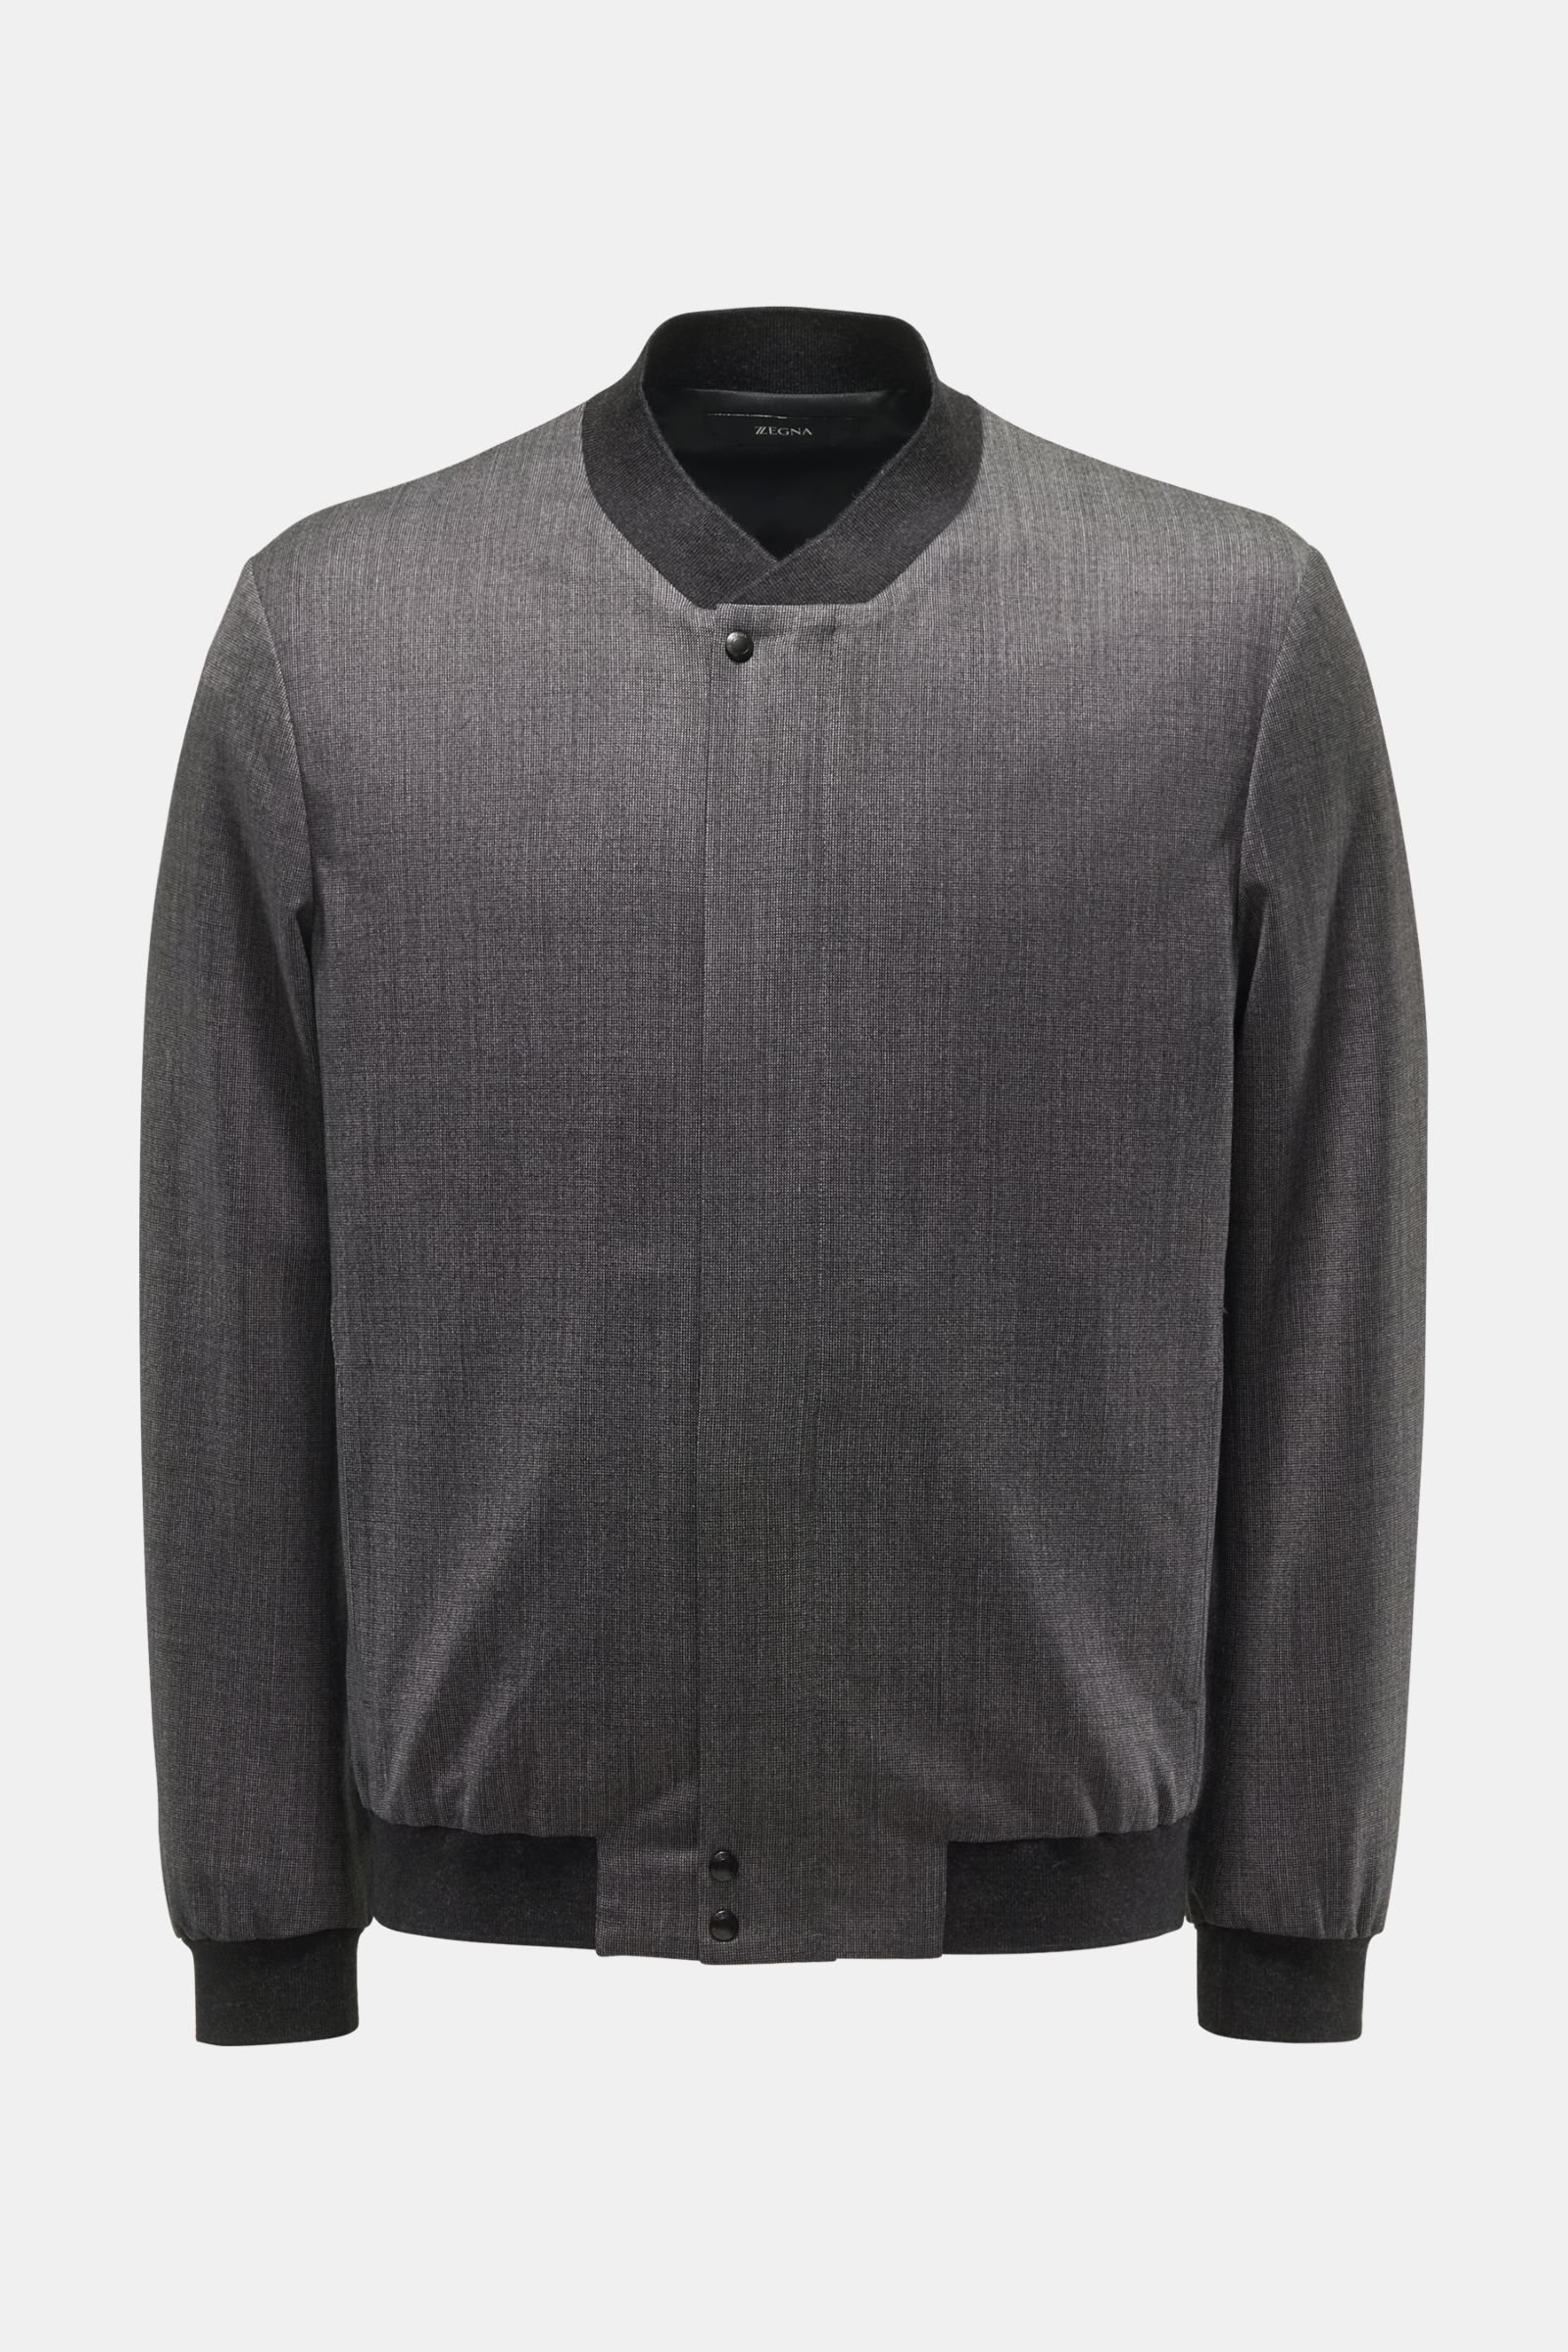 Wool bomber jacket dark grey 